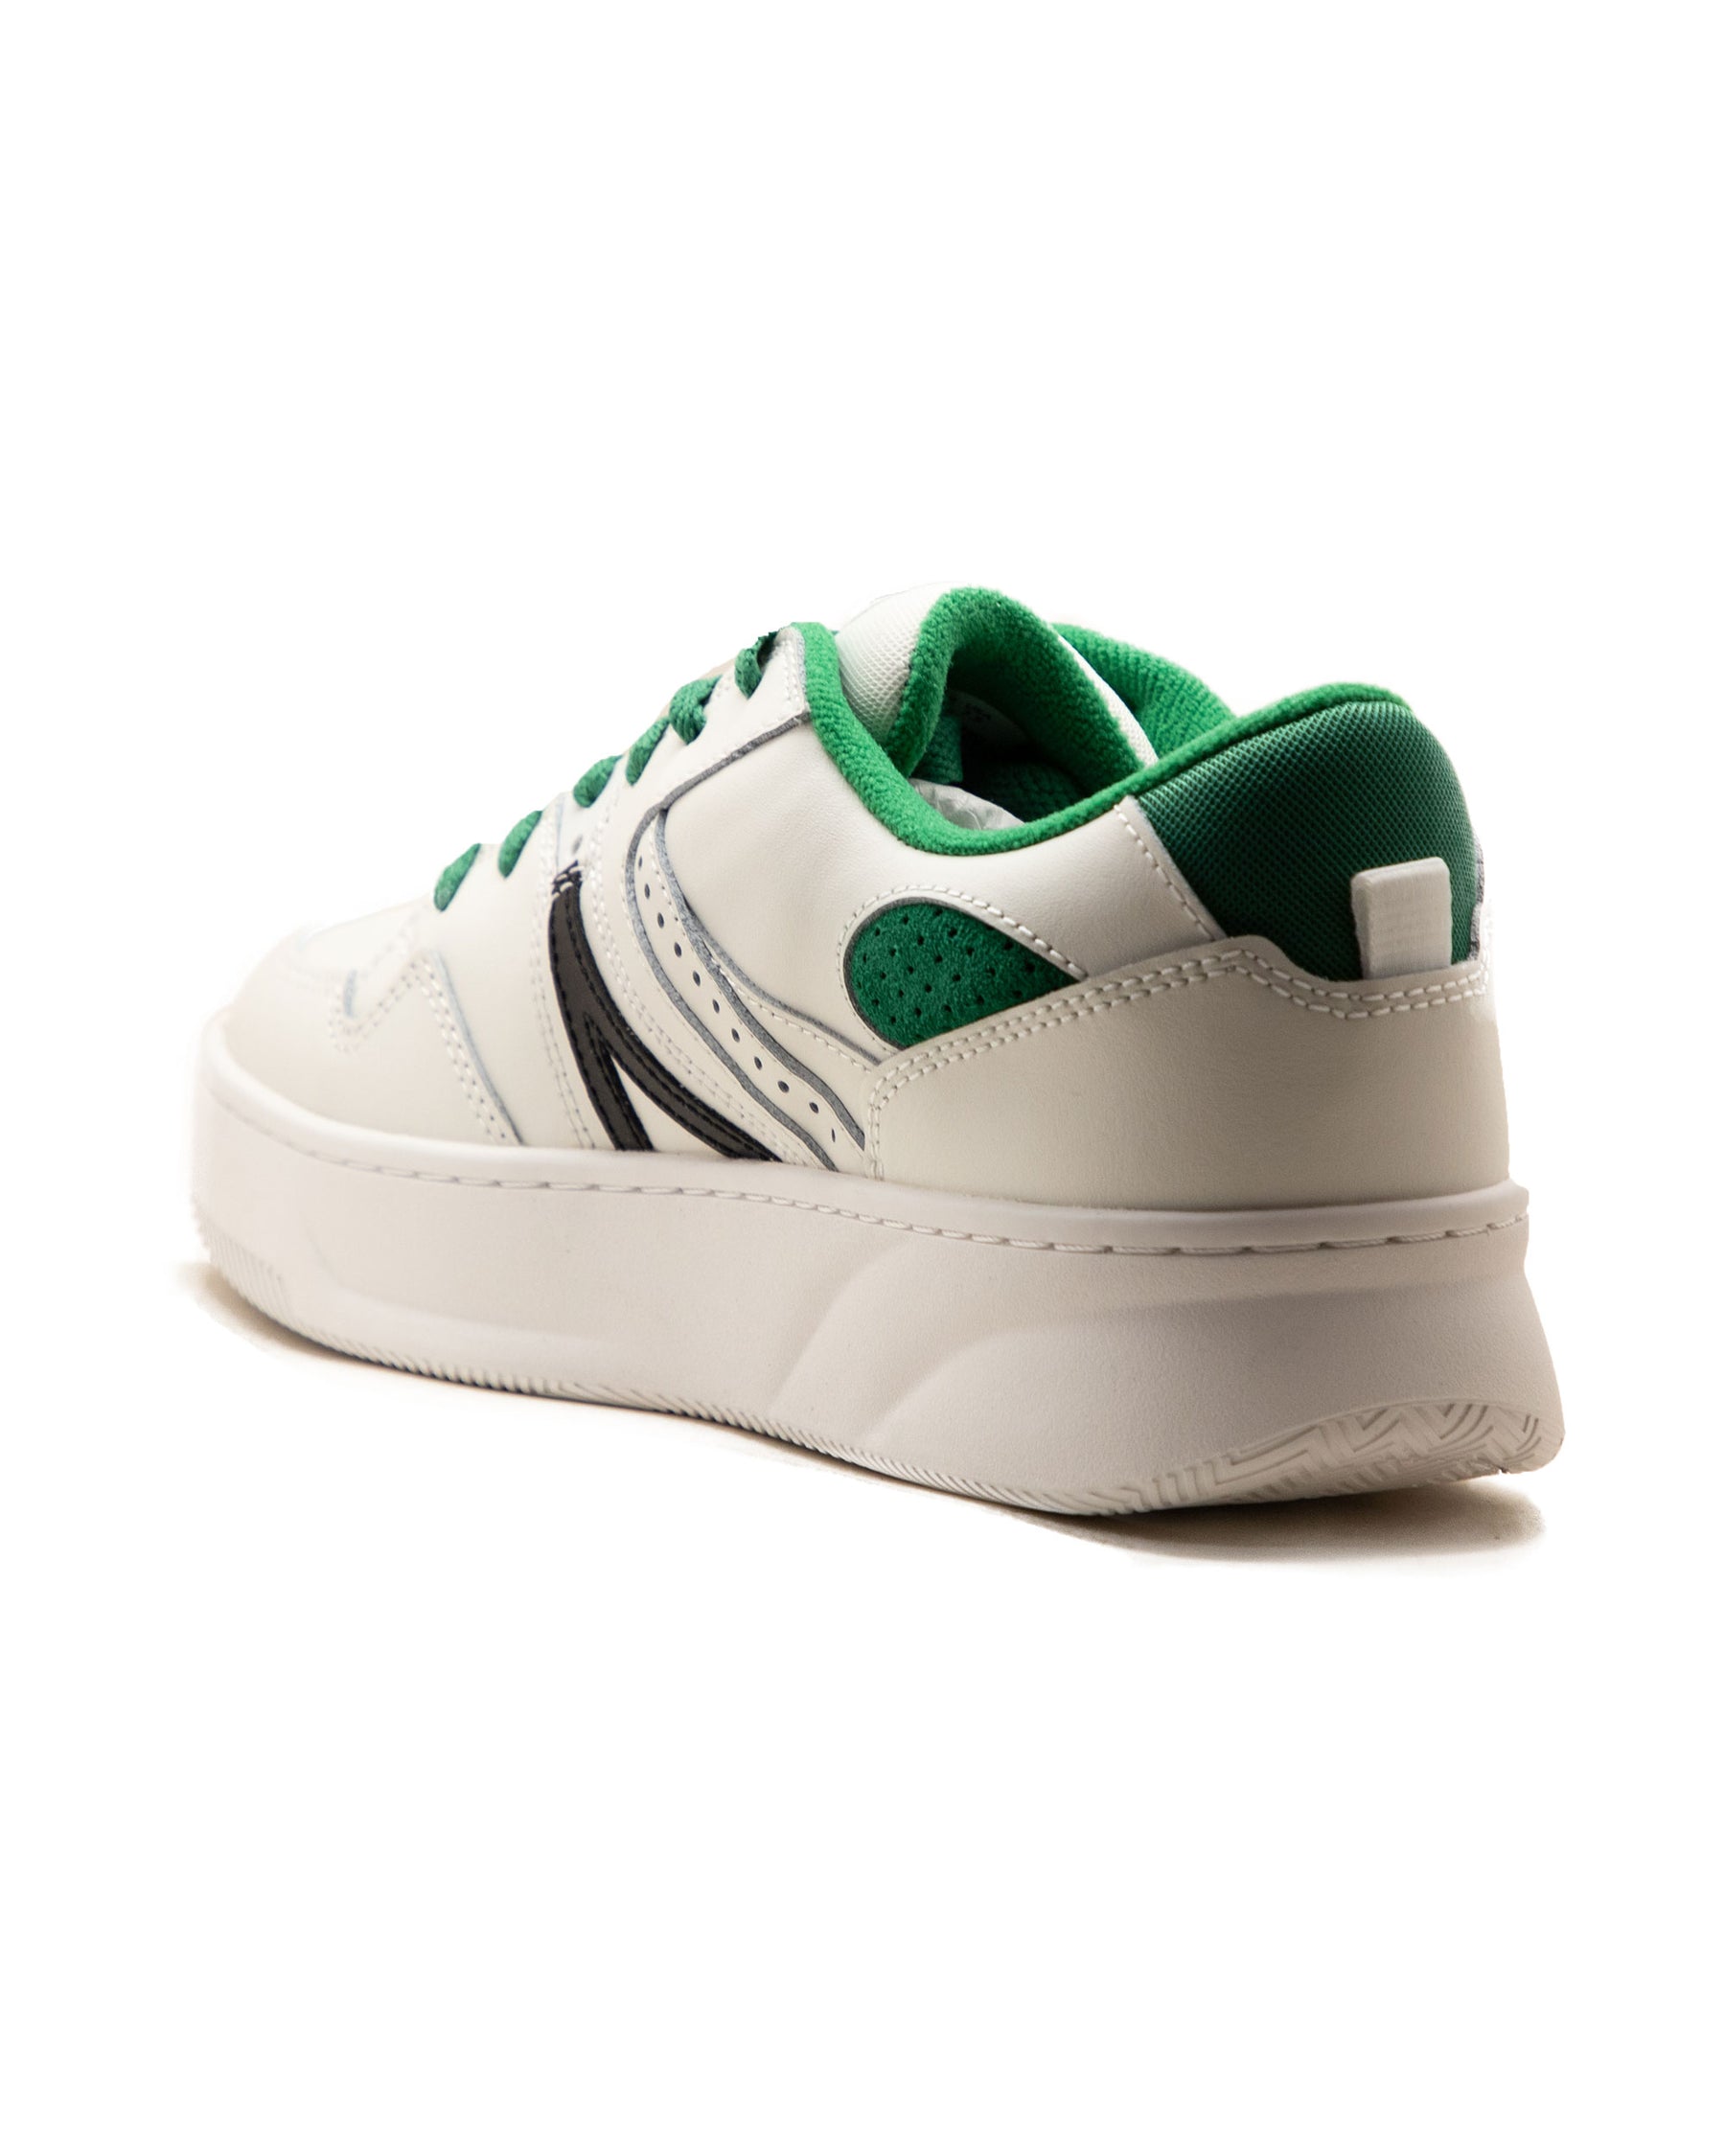 Sneakers Lacoste L005 222 SMA Bianca Verde